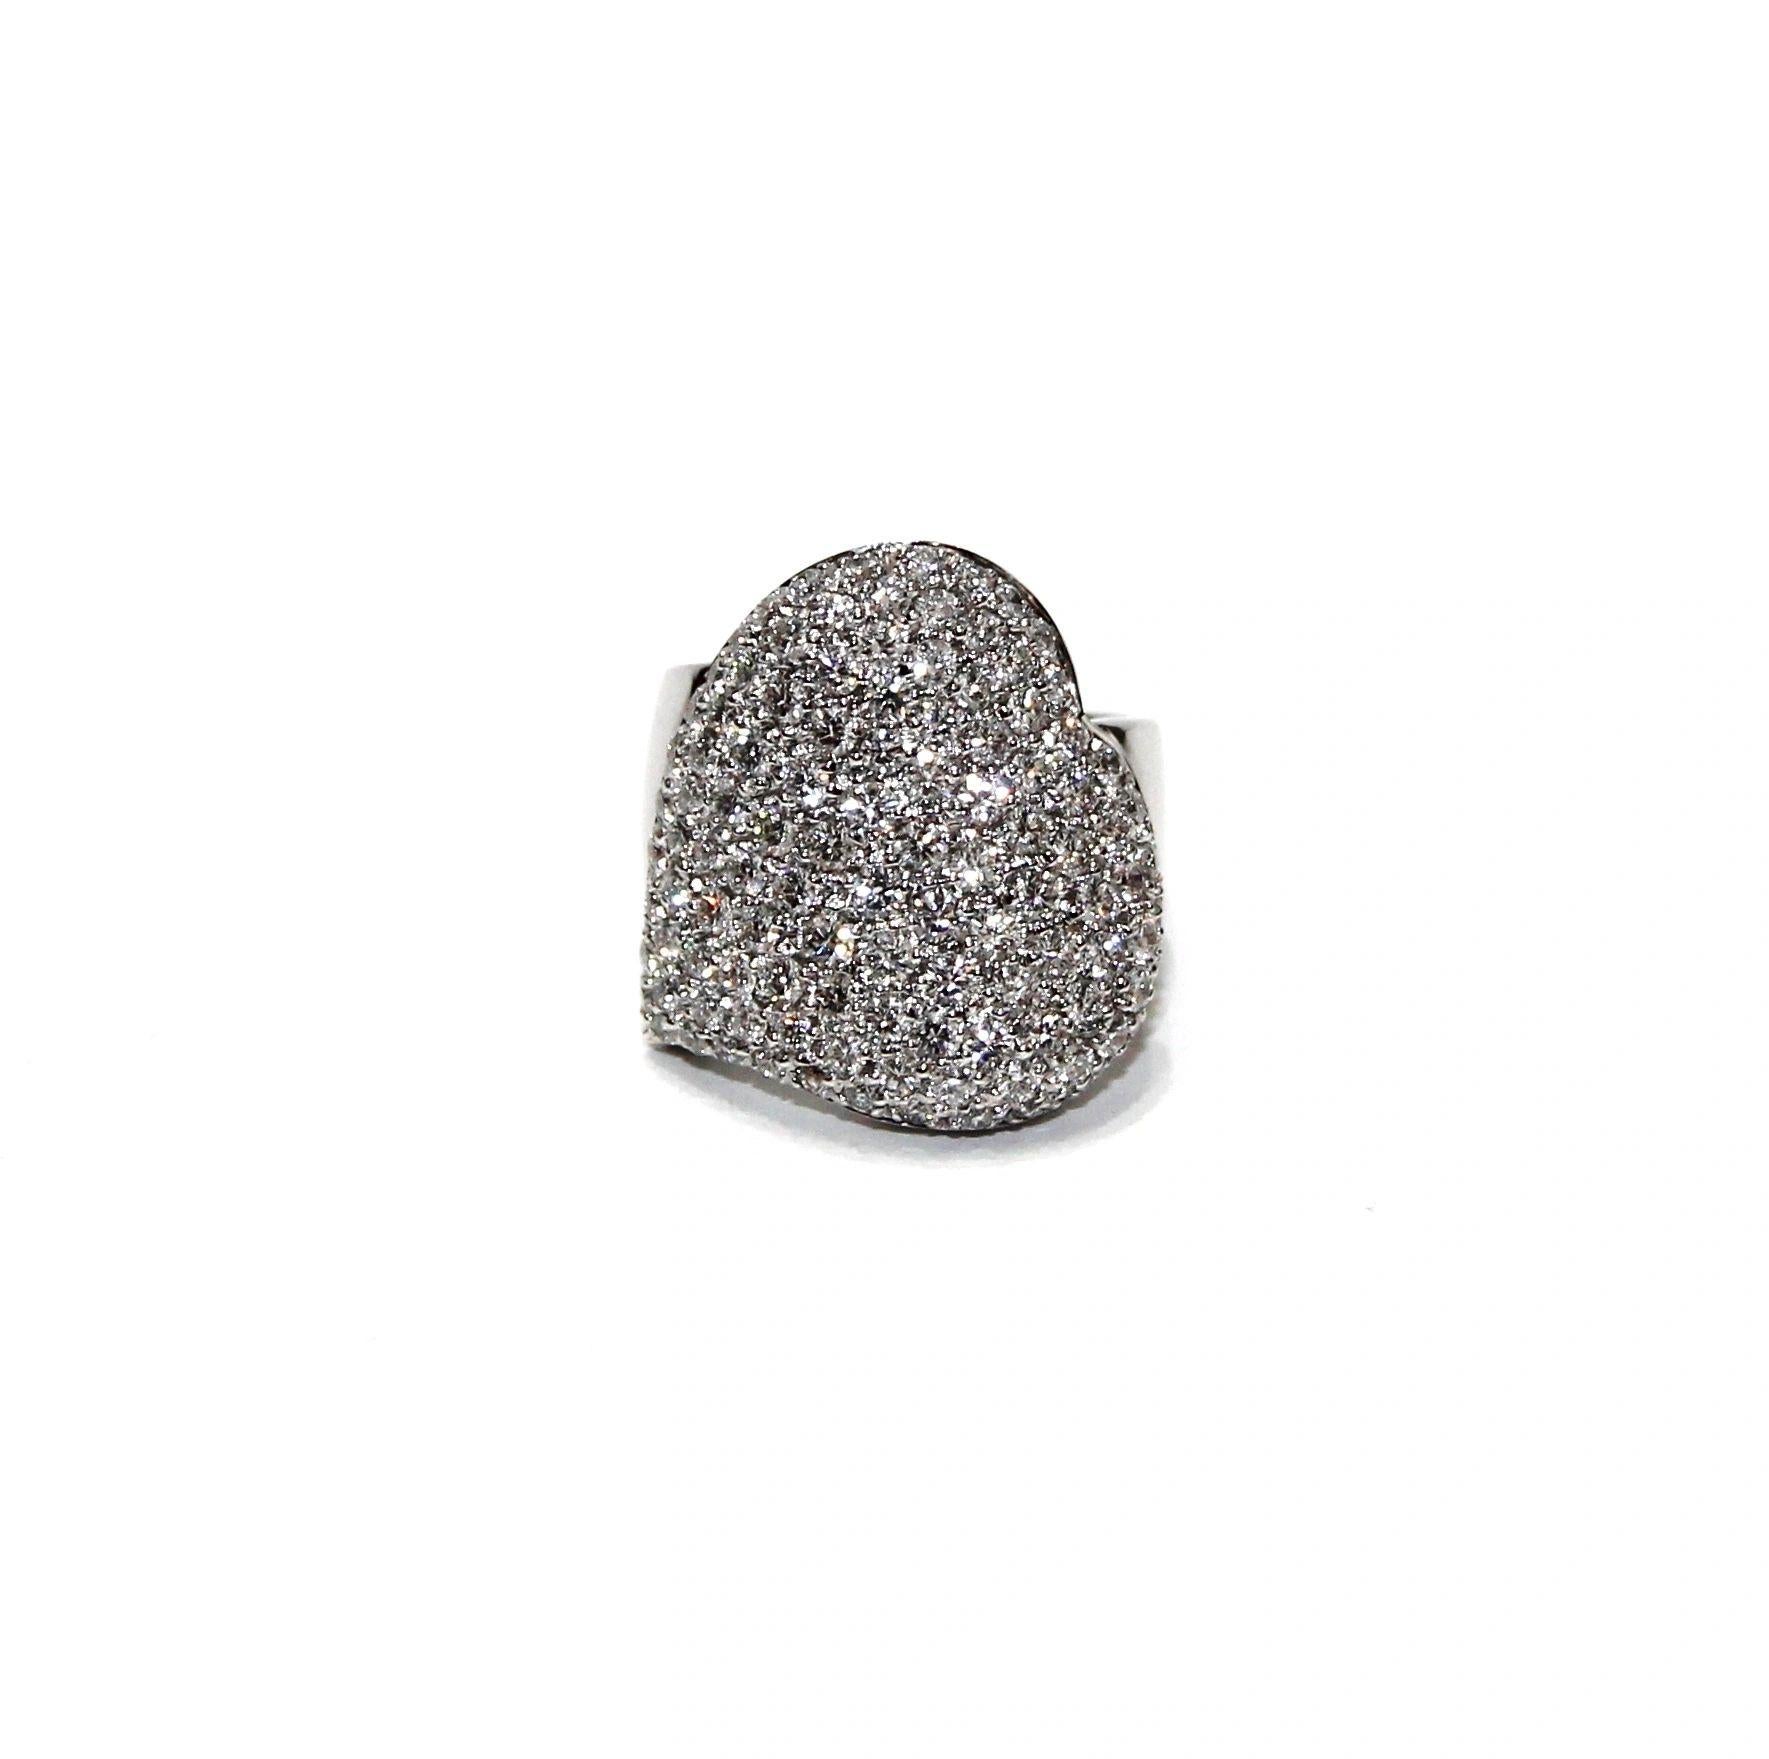 Leo Pizzo Heart Shaped Diamond Ring, 18K white gold
Diamond: 2.71ctw
Color: G-H
Clarity: VS1/VS2
Ring size: 6.5
SKU: LPO01413
Retail price: $14,010.00